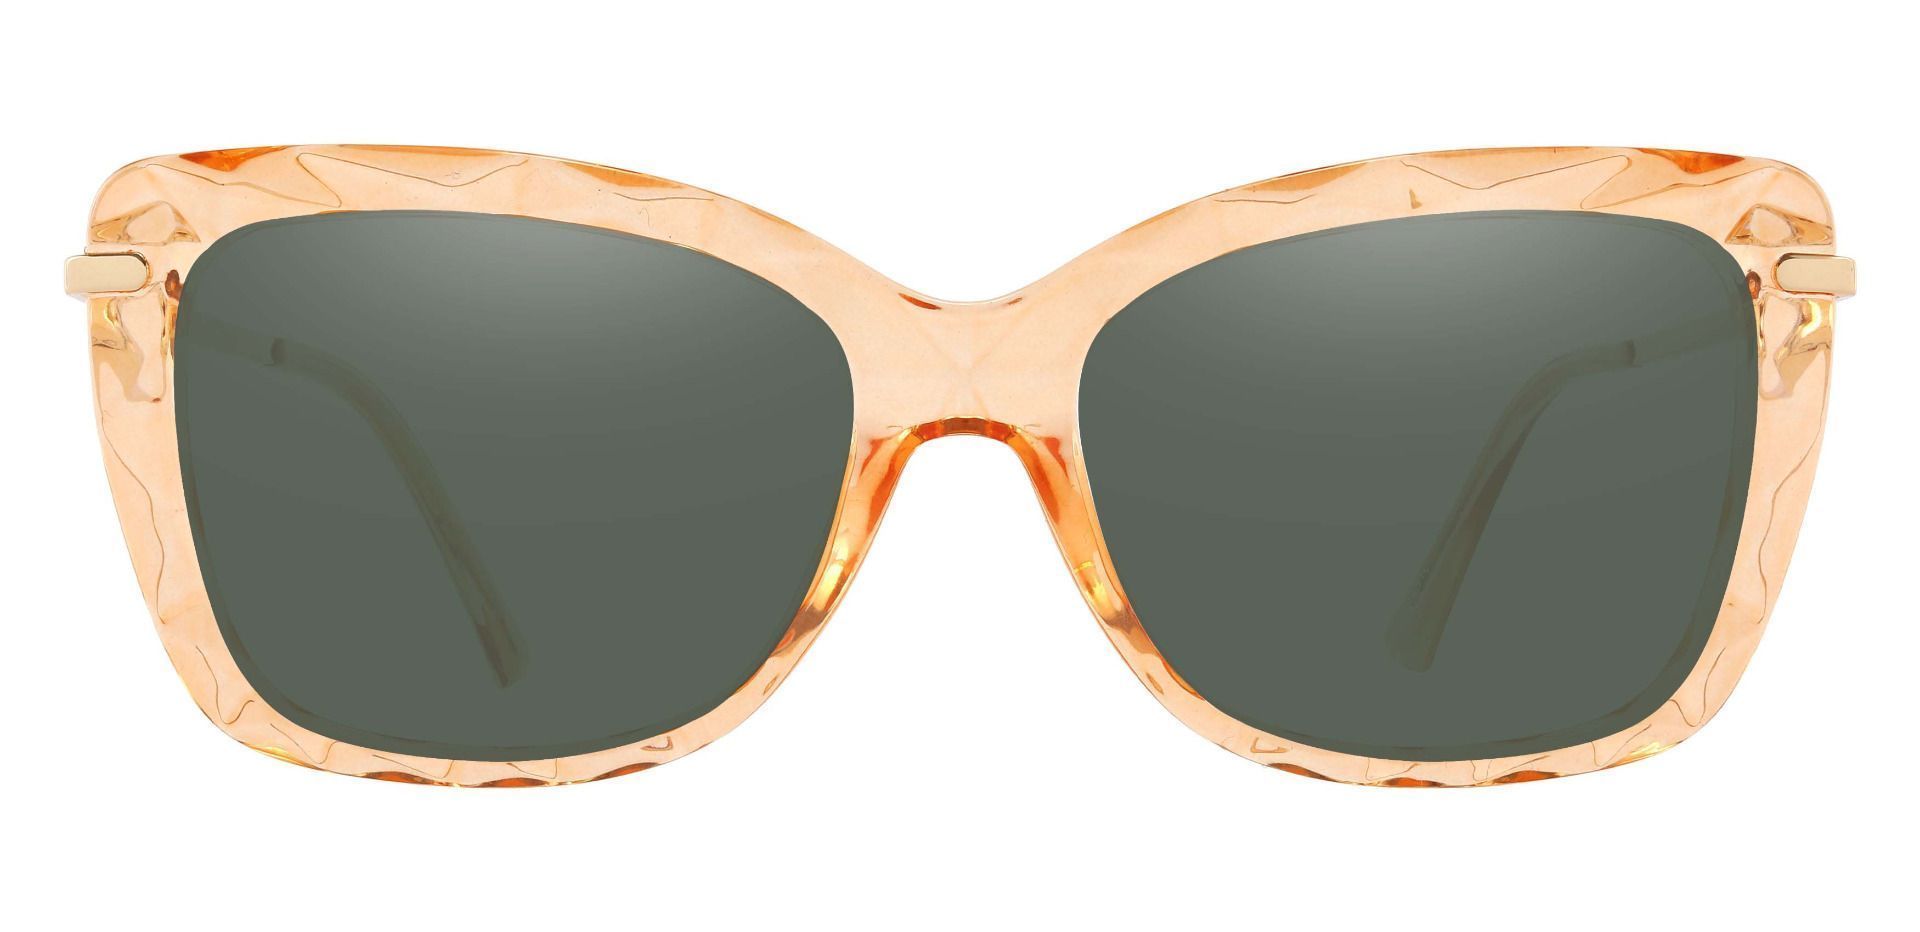 Shoshanna Rectangle Progressive Sunglasses - Brown Frame With Green Lenses